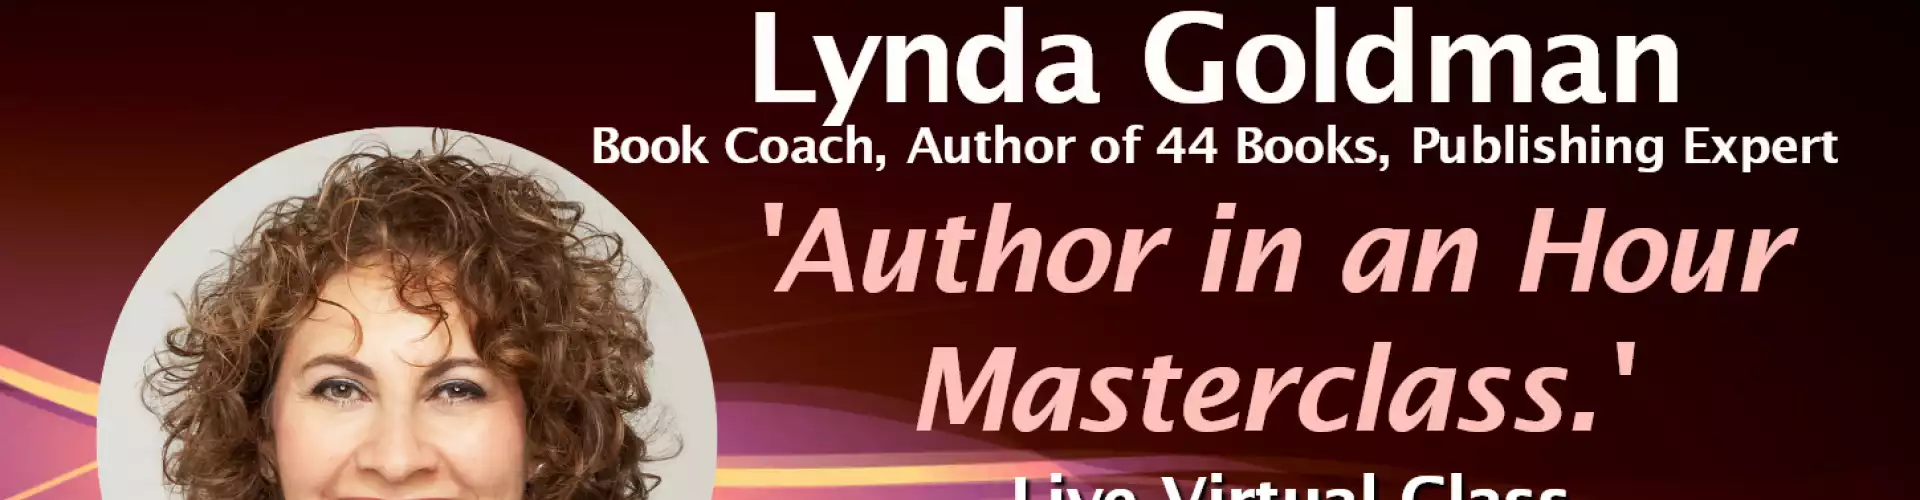 Author in an Hour Masterclass w/WU Expert Lynda Goldman Book Coach